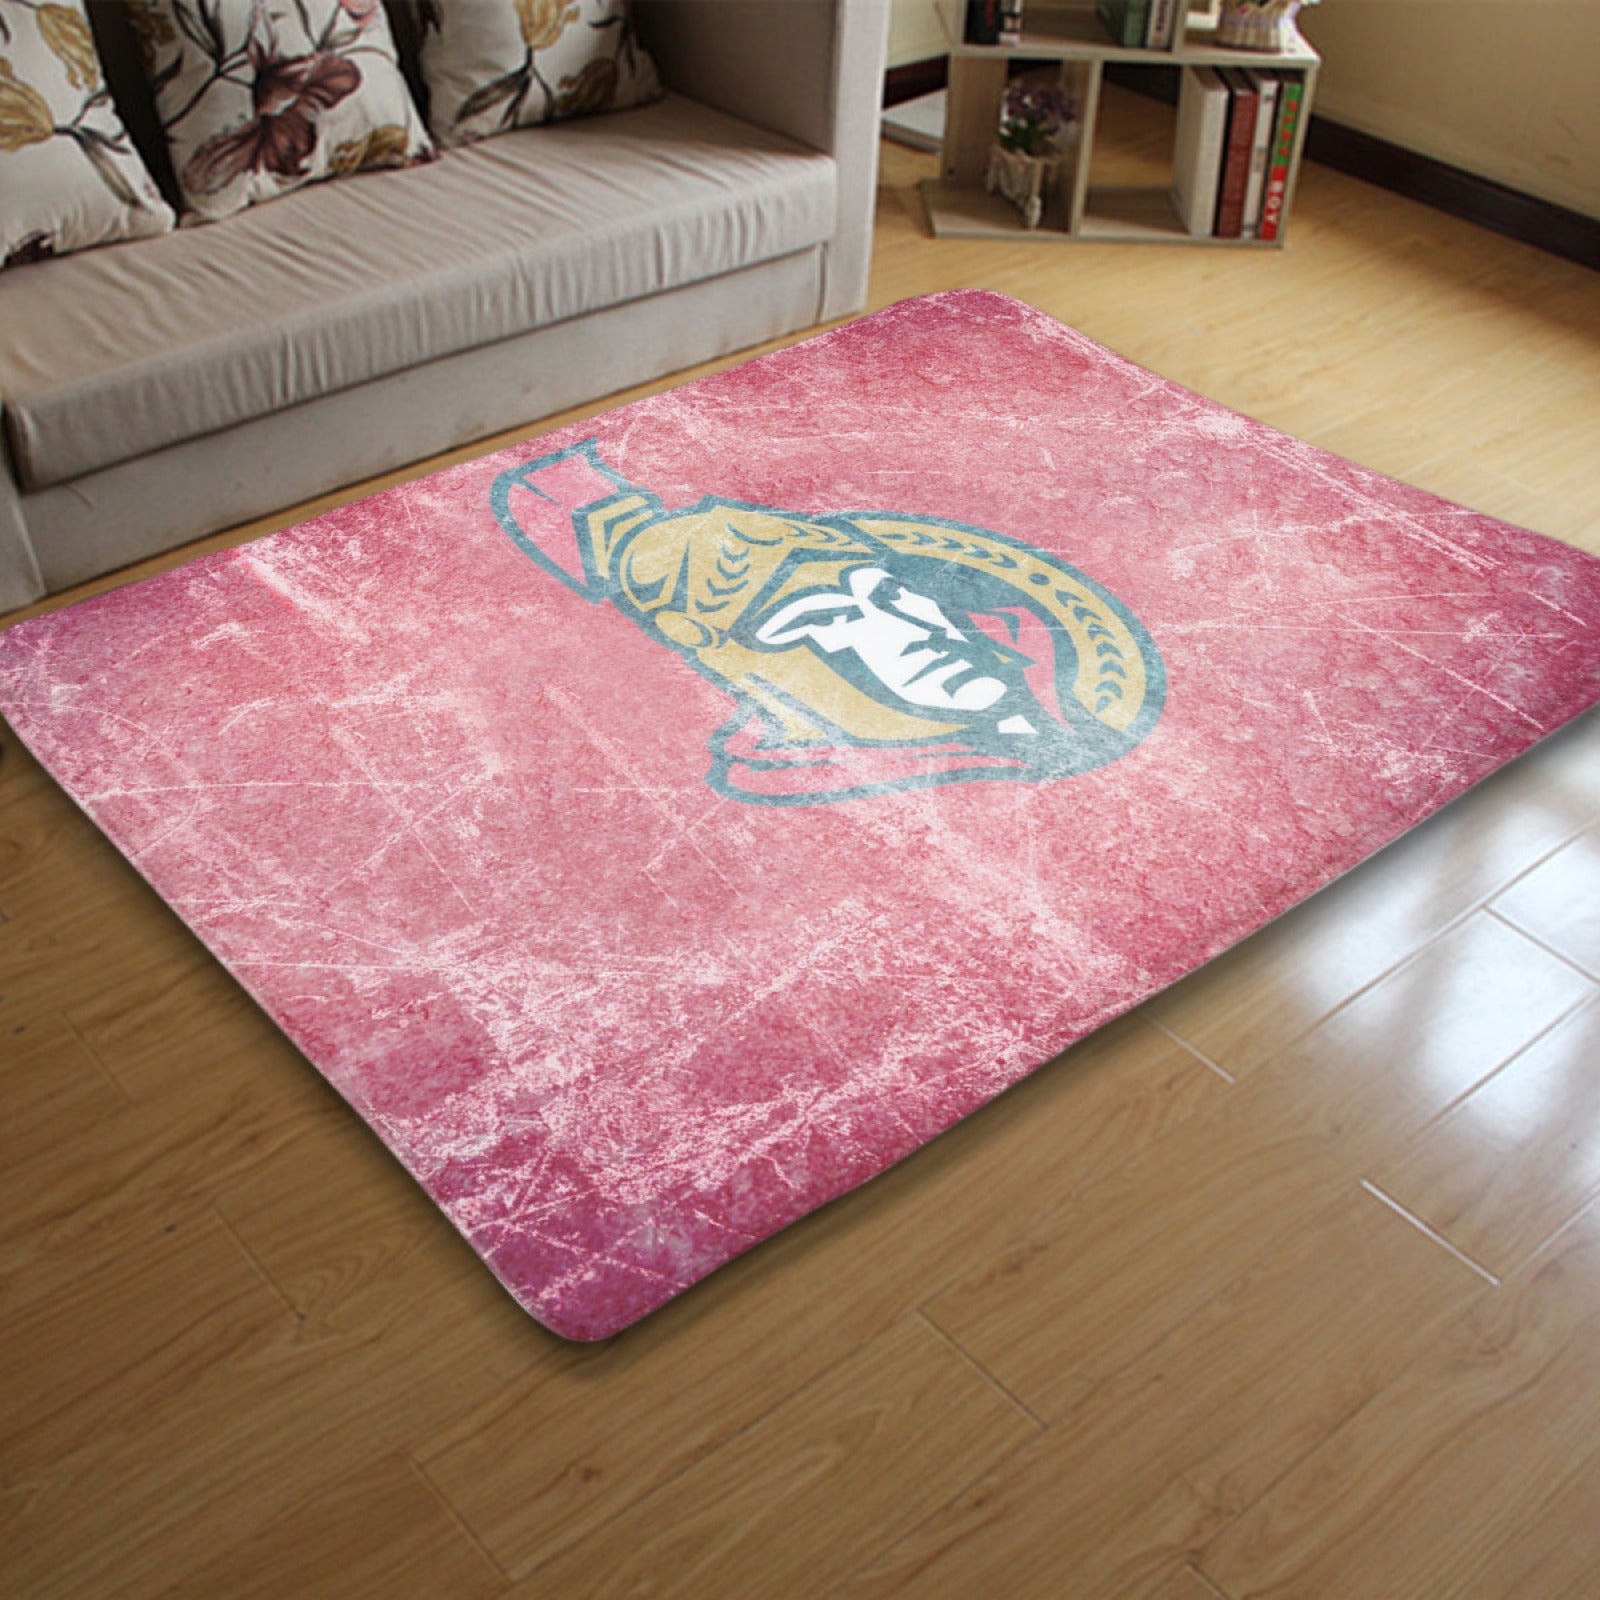 Ottawa Senators Hockey League Carpet Living Room Bedroom Mats Kitchen Bathroom Rugs